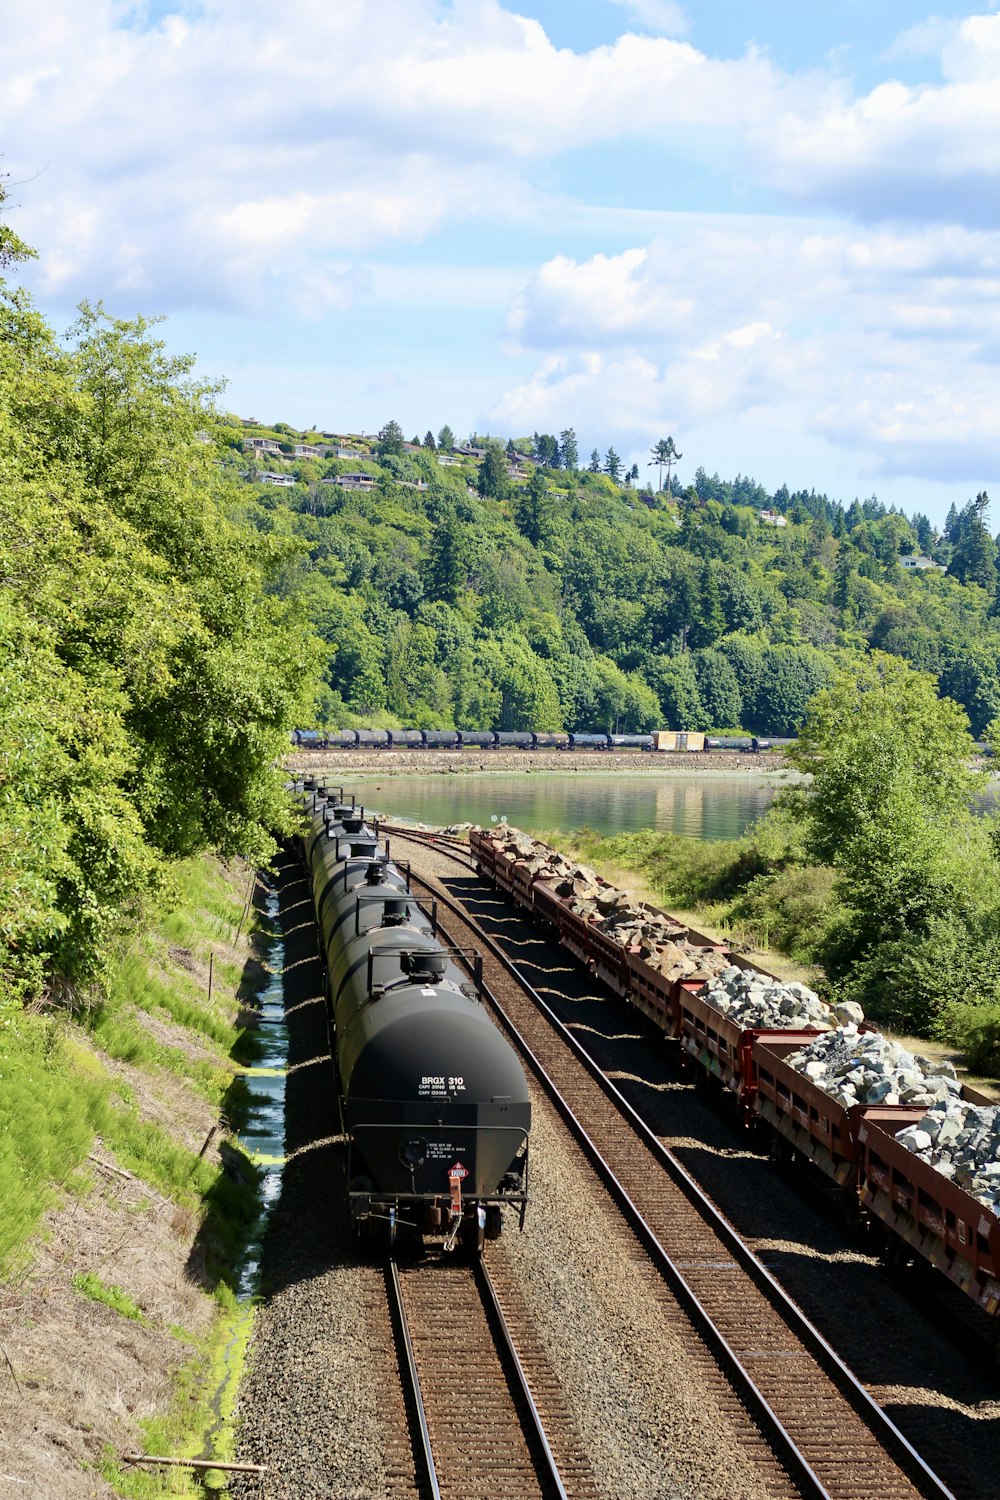 black train on rail near green trees during daytime